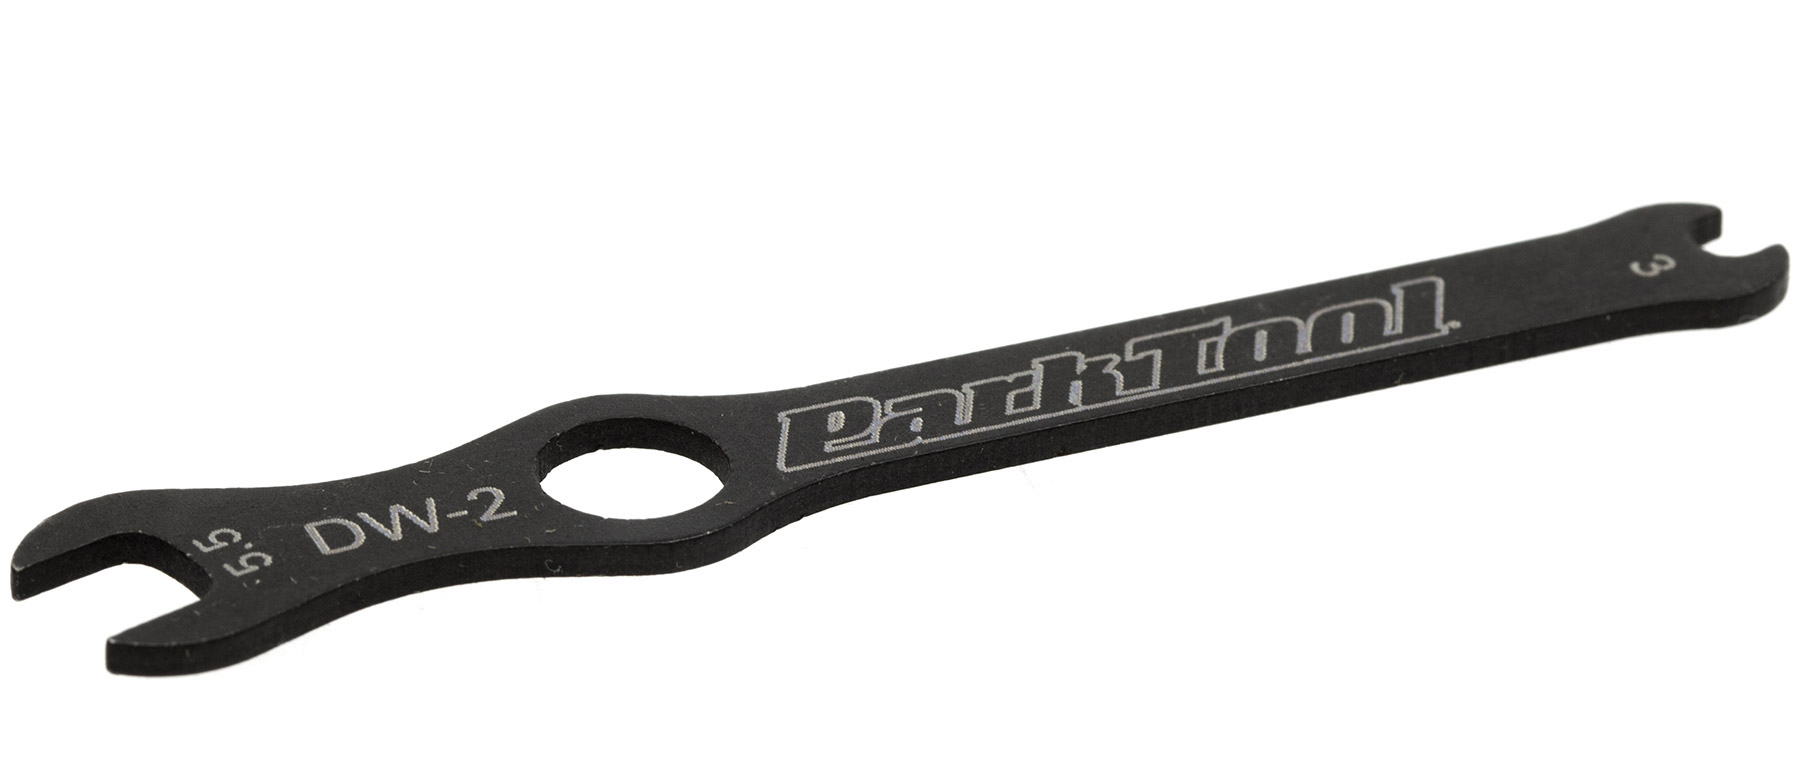 Park Tool DW-2 Derailleur Clutch Wrench